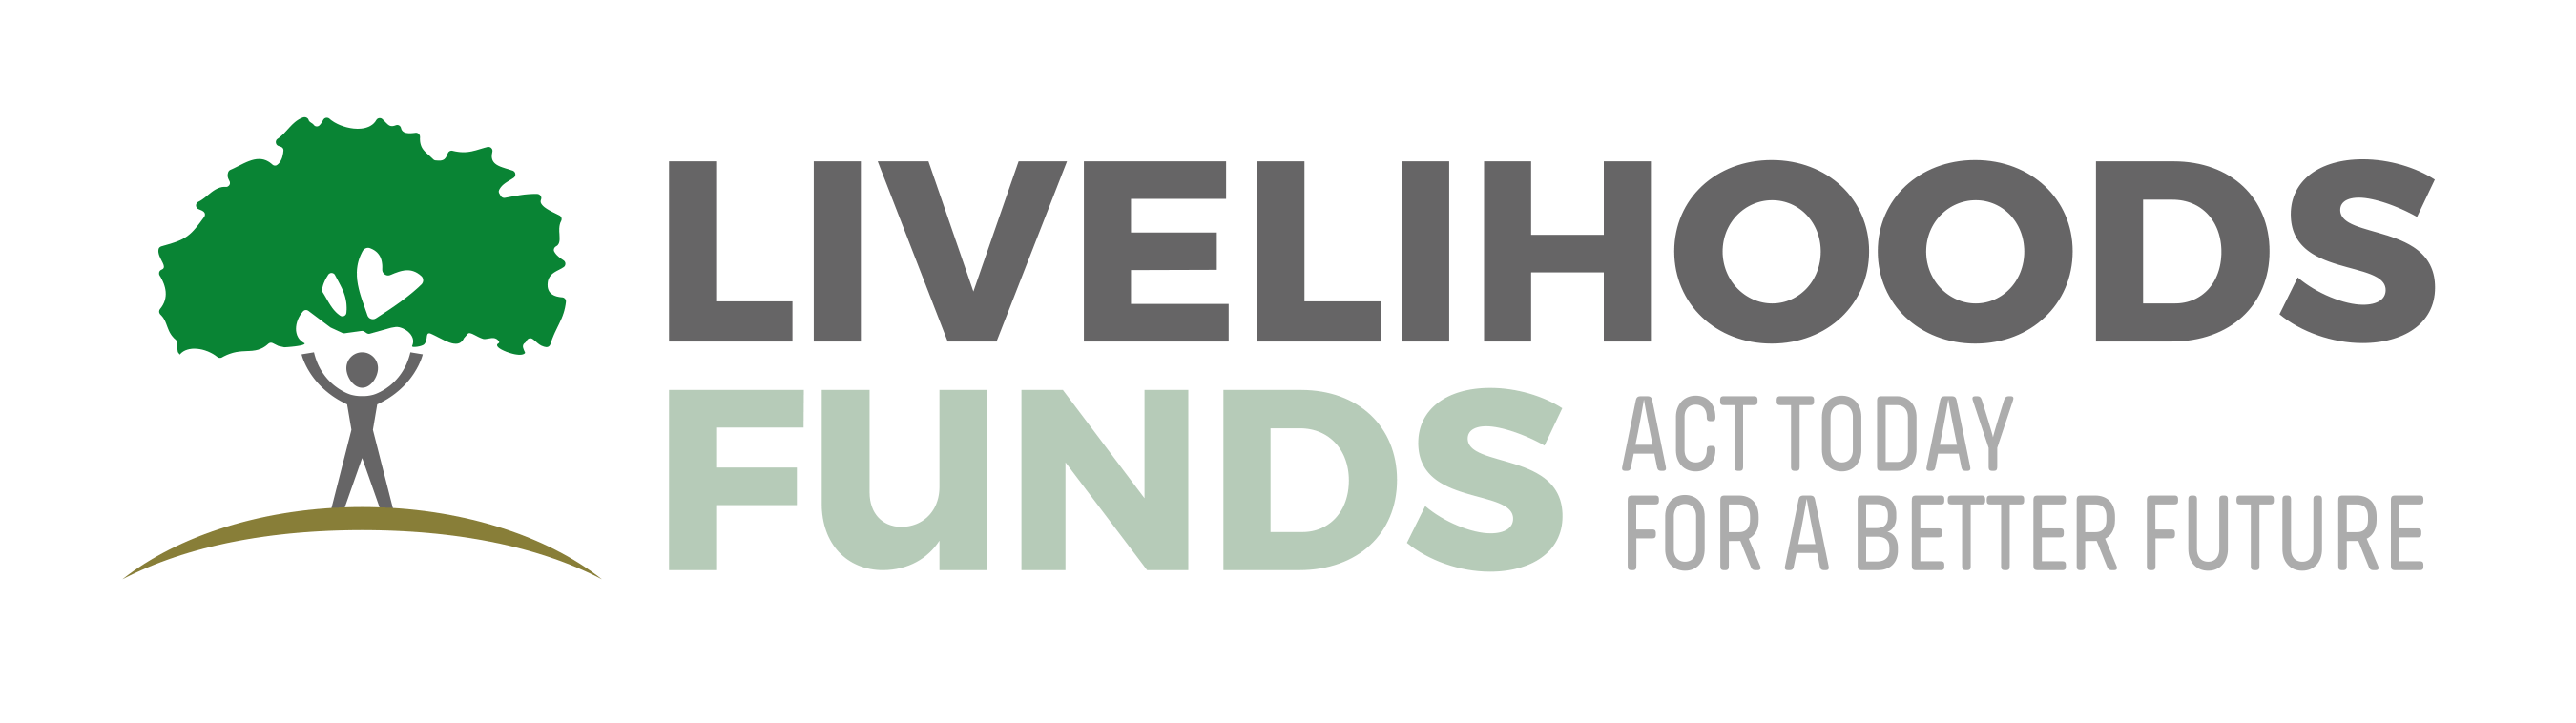 Fund Logo - Livelihoods Funds